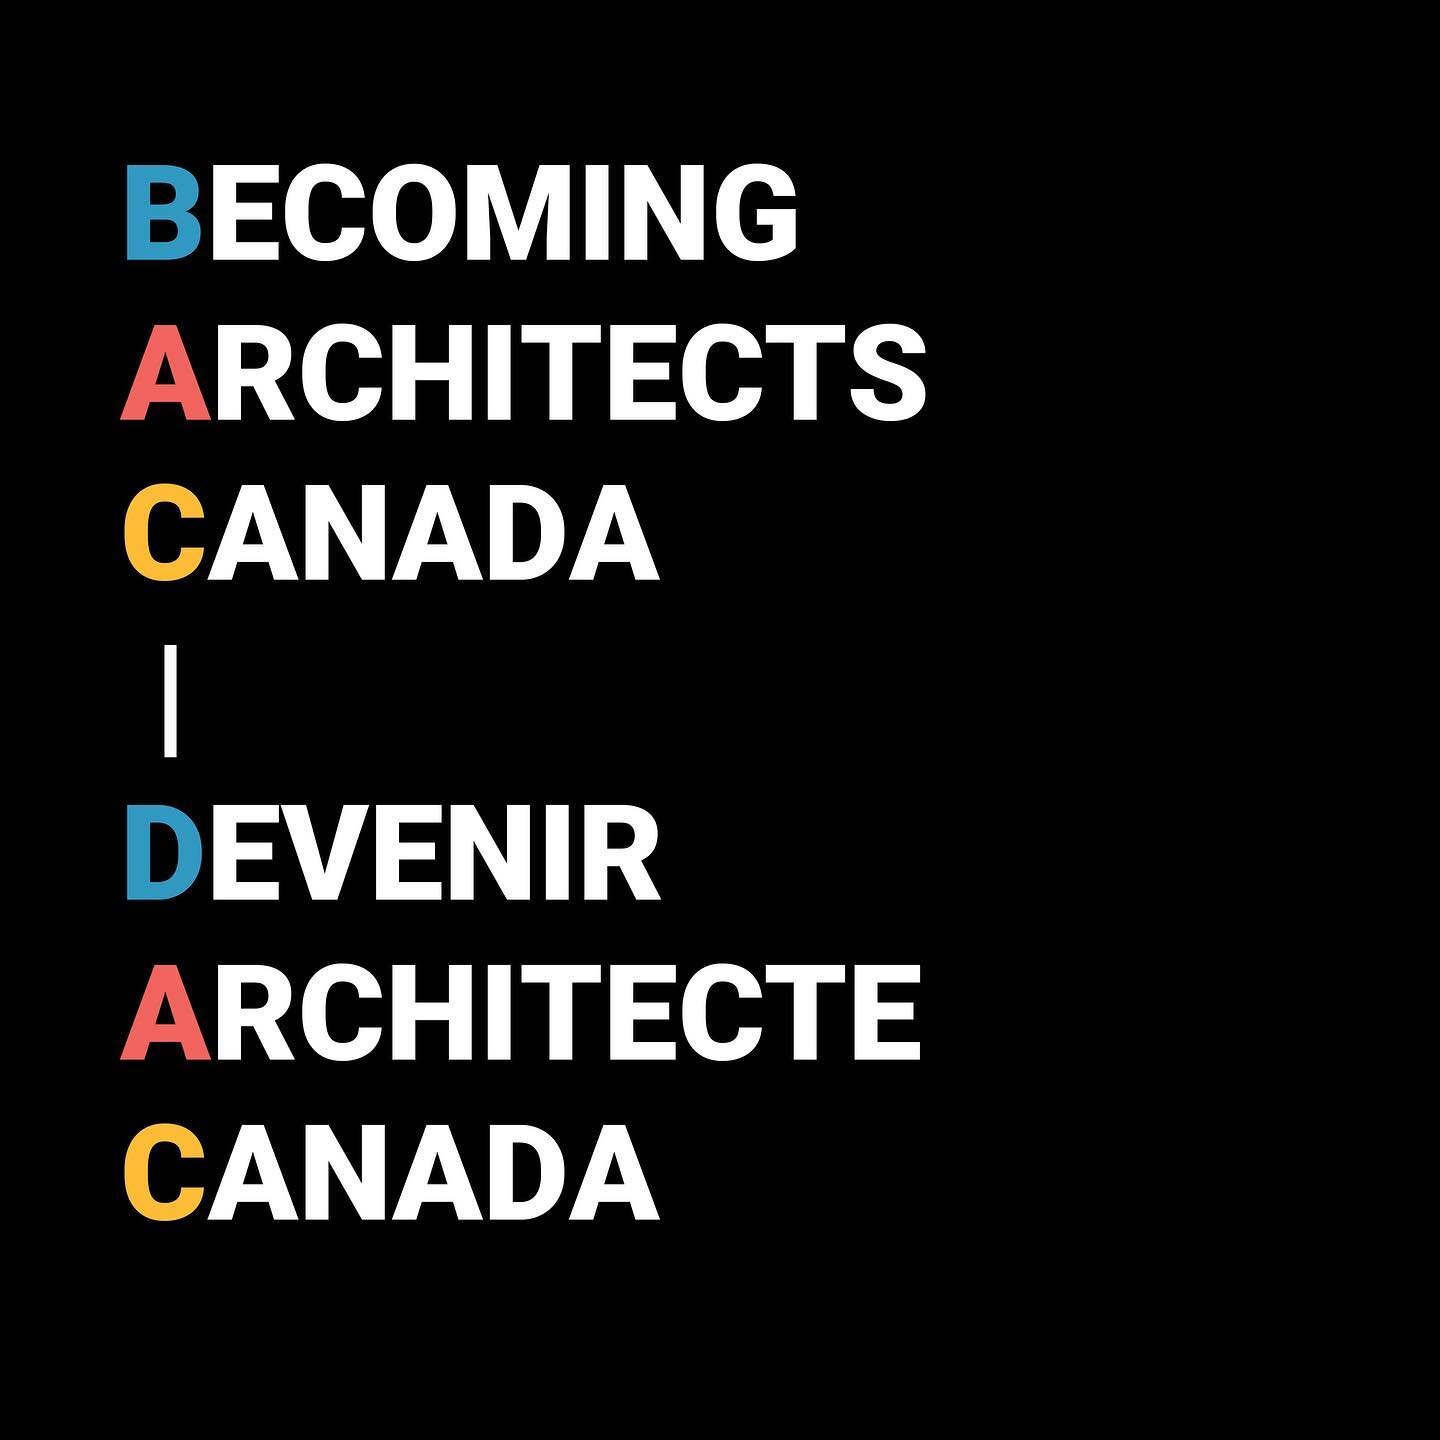 BECOMING ARCHITECTS CANADA 
DEVENIRE ARCHITECTE CANADA
.
.
#bacdac #becomingarchitects  #internarchitect  #canadianarchitecture #canadaexac #architecturallicensure